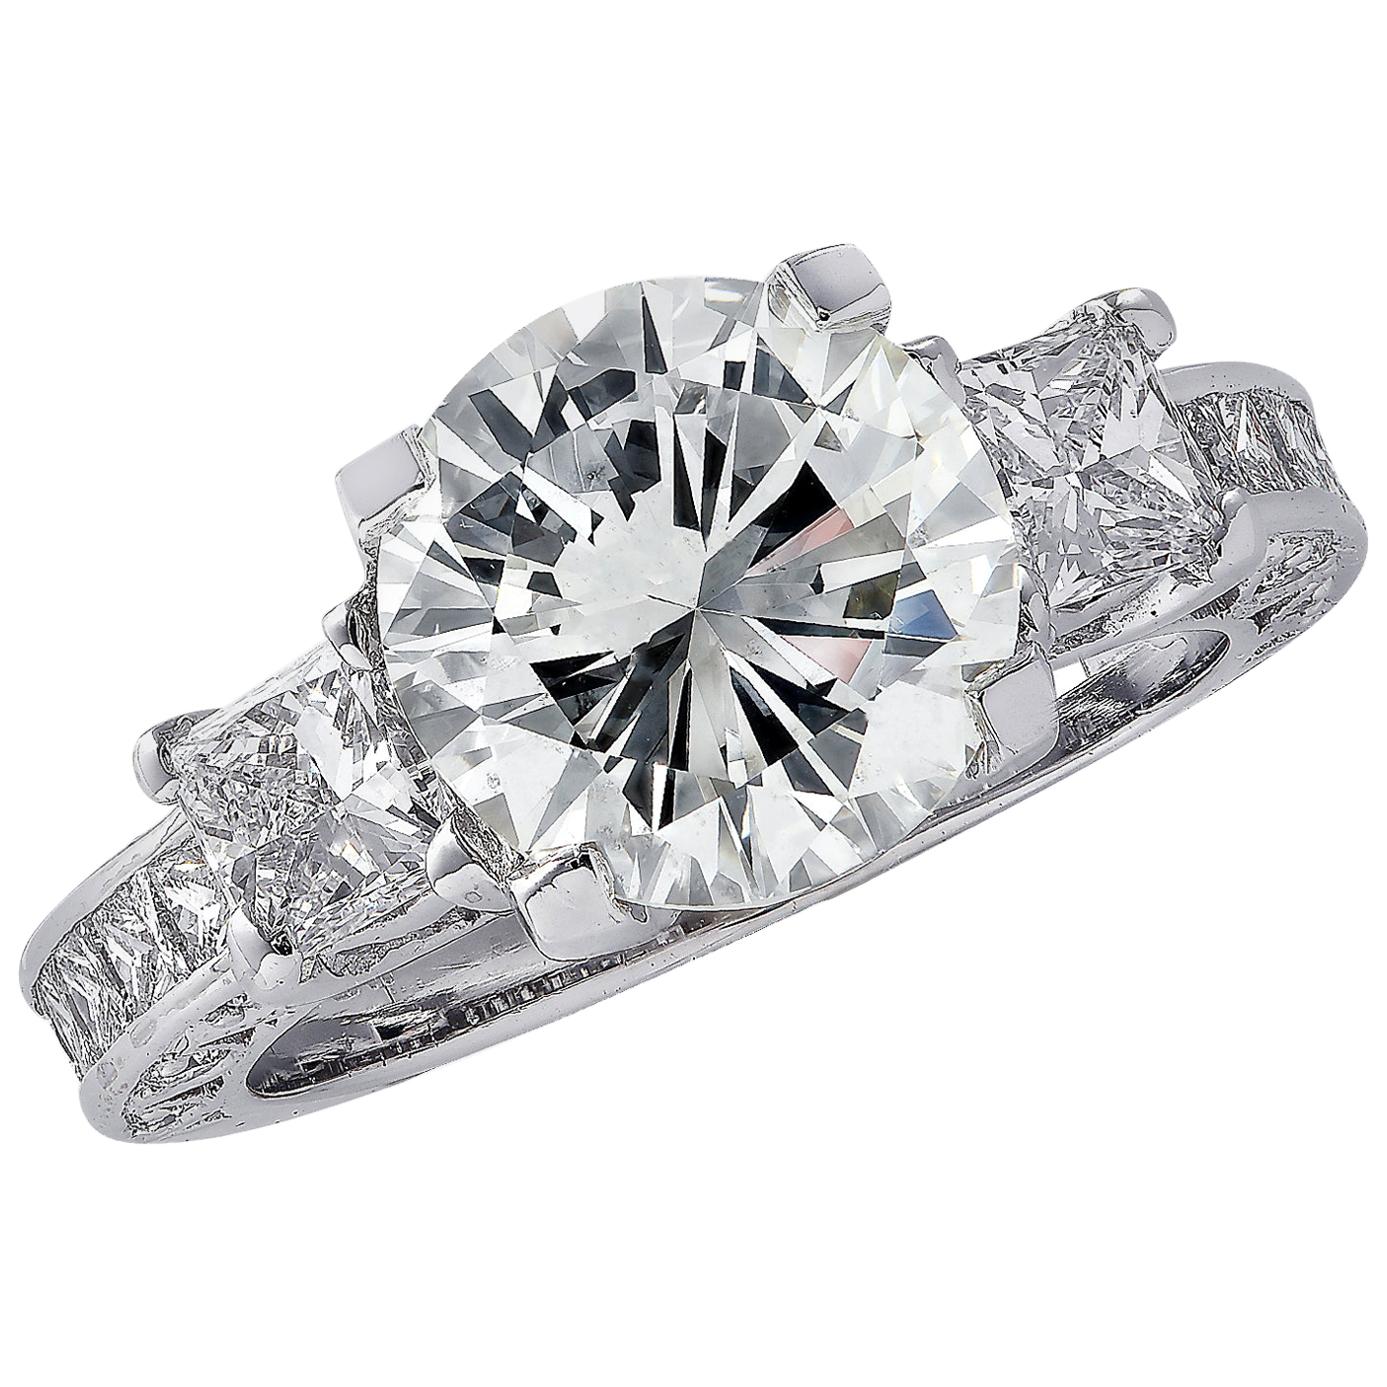 Vivid Diamonds GIA Certified 3.03 Carat Diamond Engagement Ring